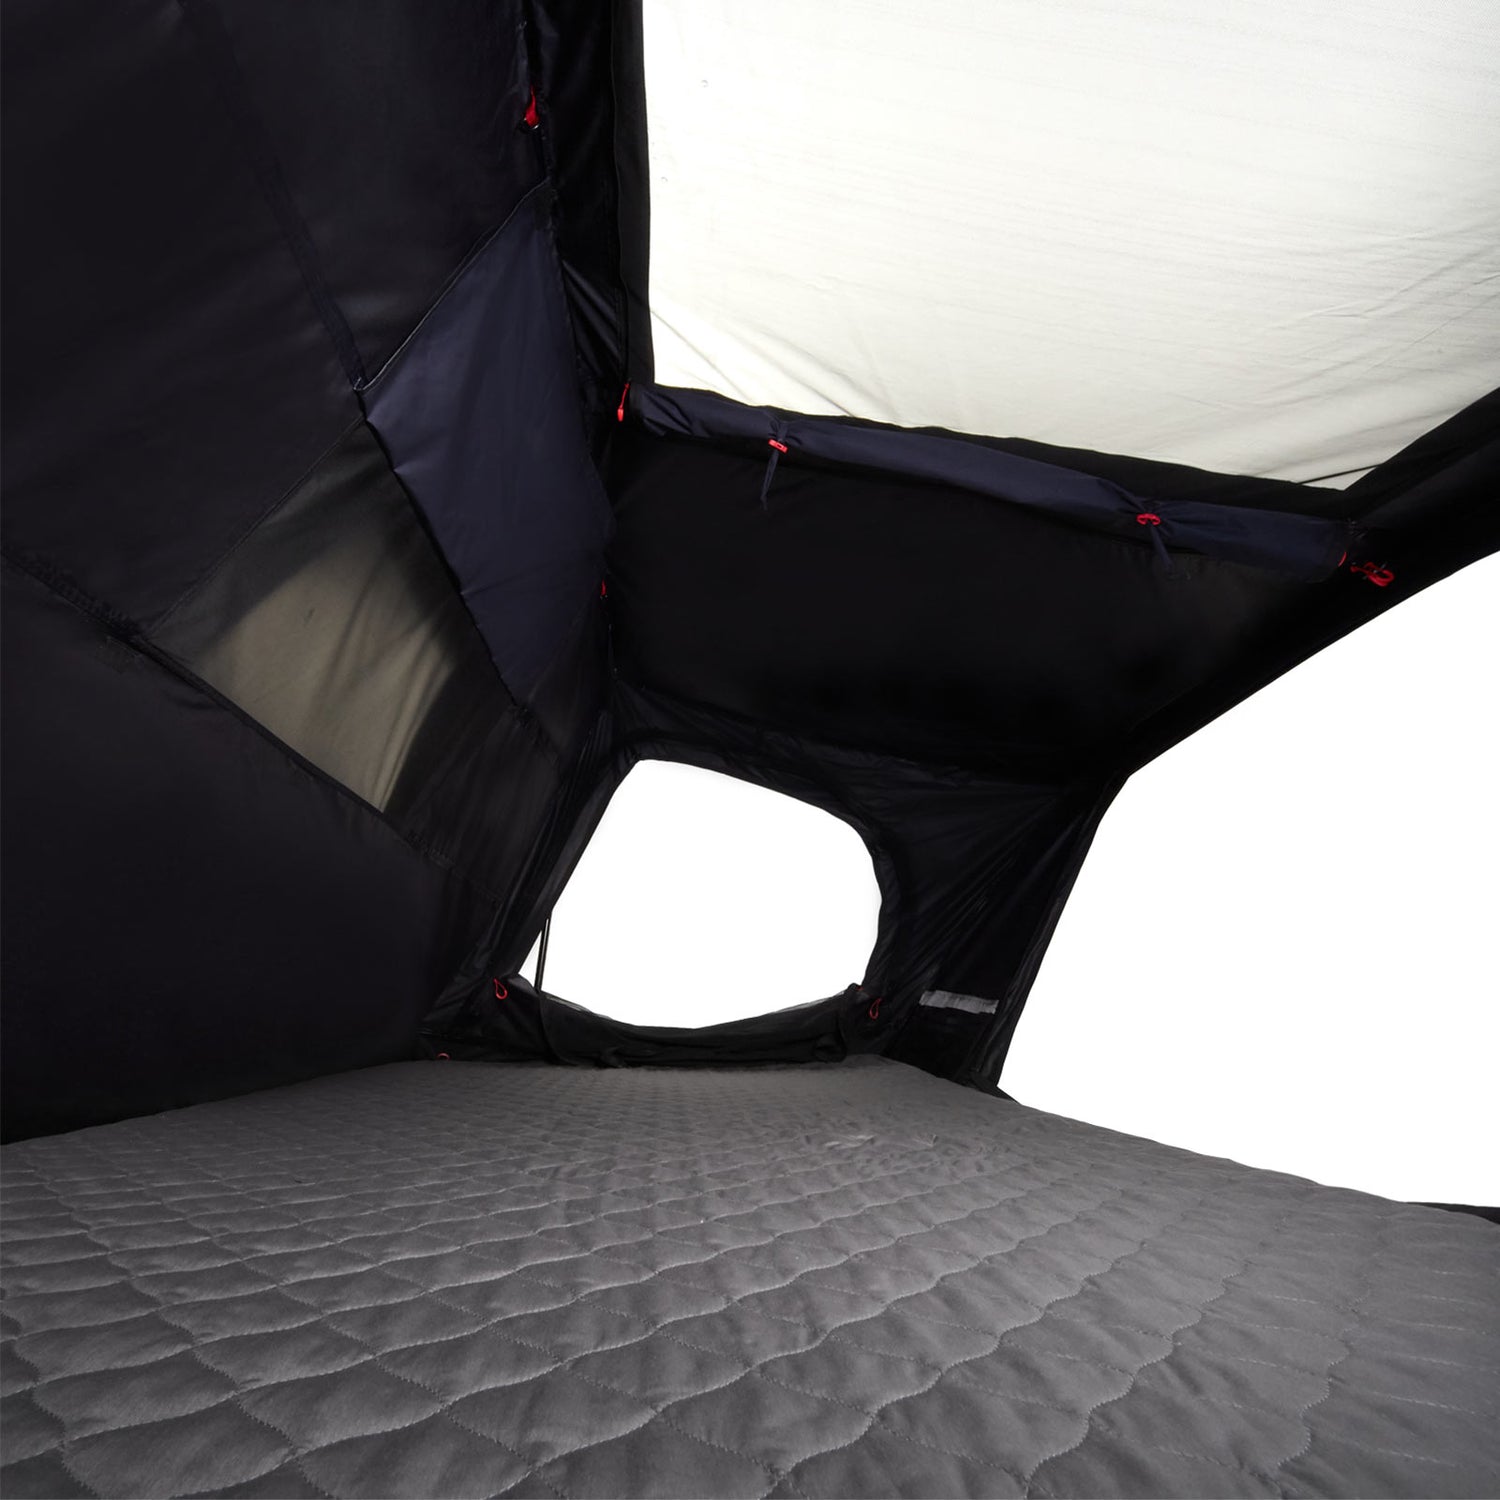 qeedo Freedom Slim 2: The aerodynamic hardcover roof tent